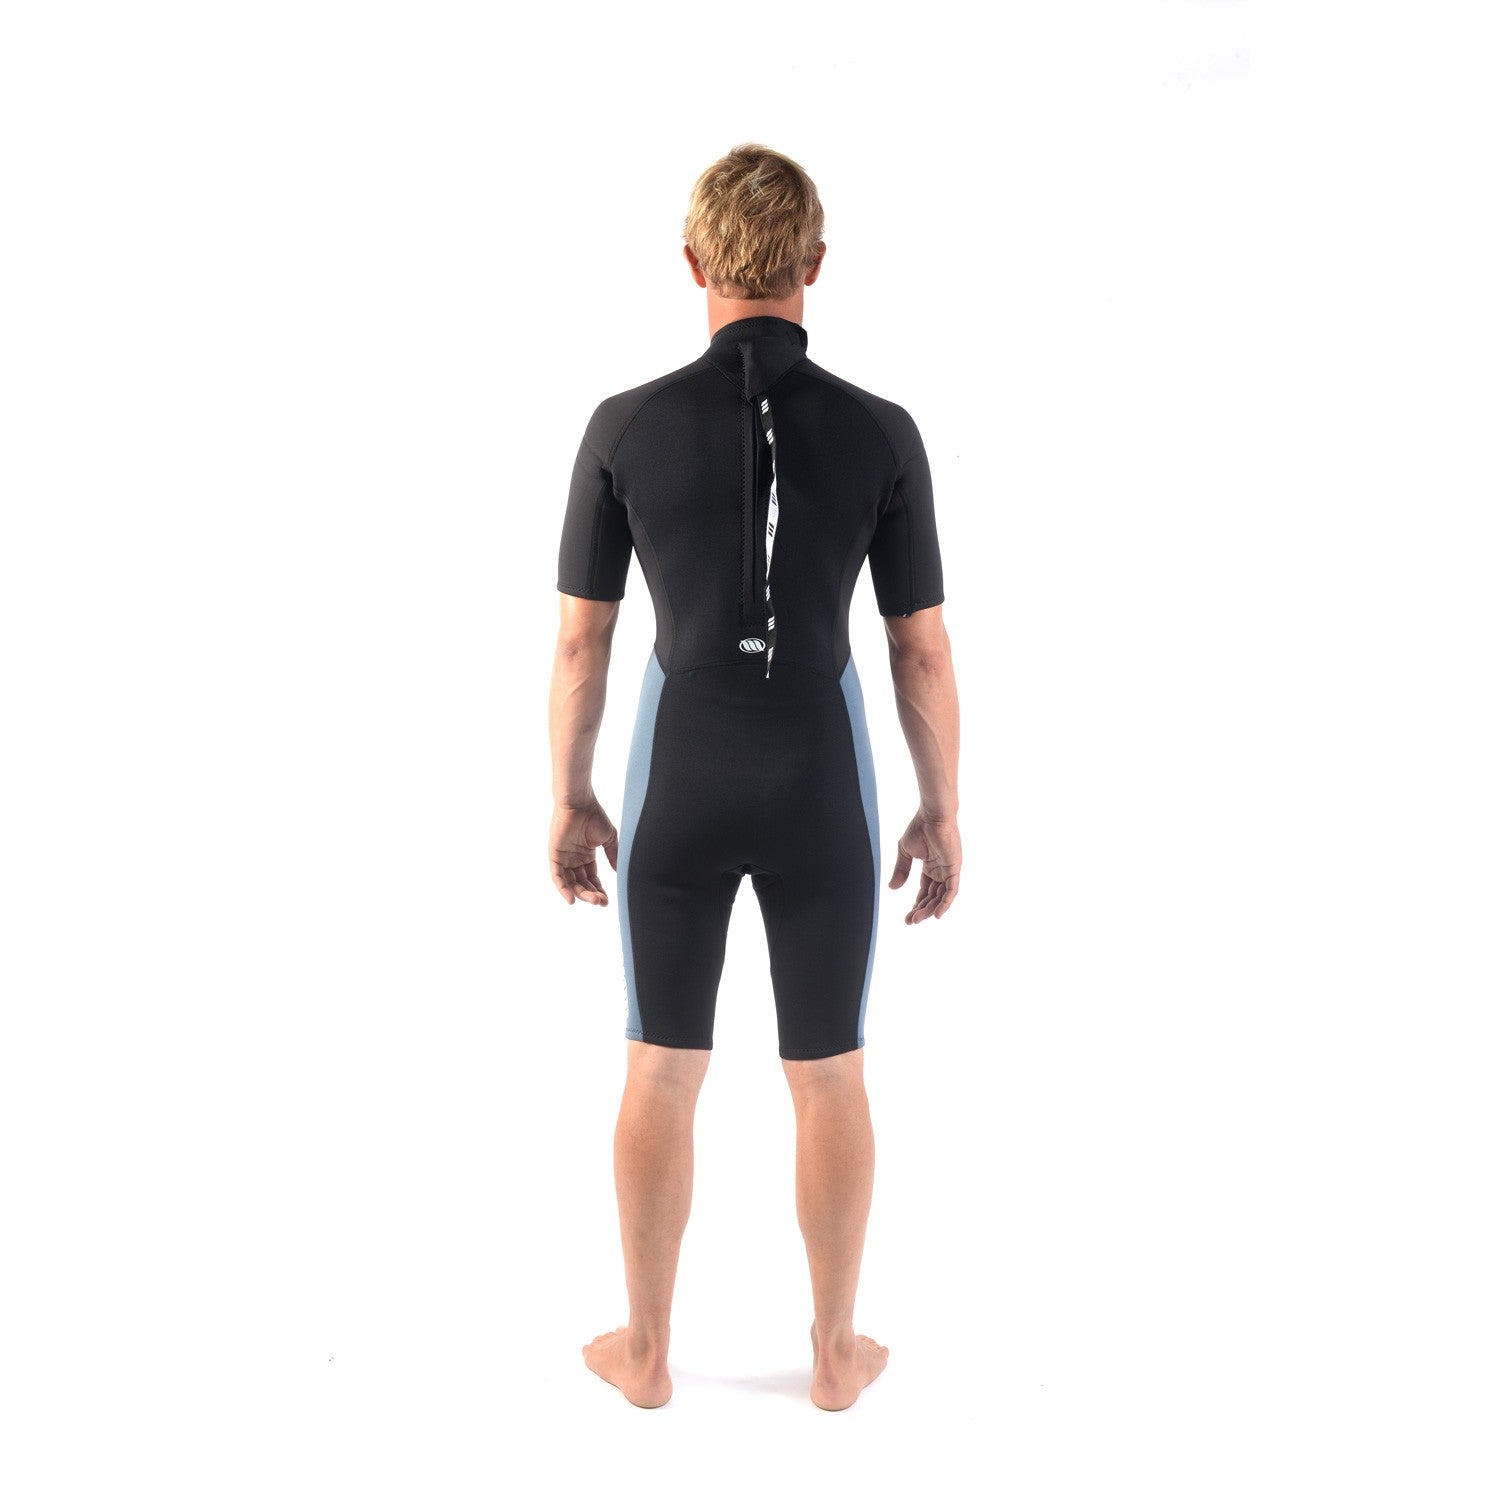 WEST - Surf wetsuit - Enforcer-S Shorty 2/2mm back zip - Graphite